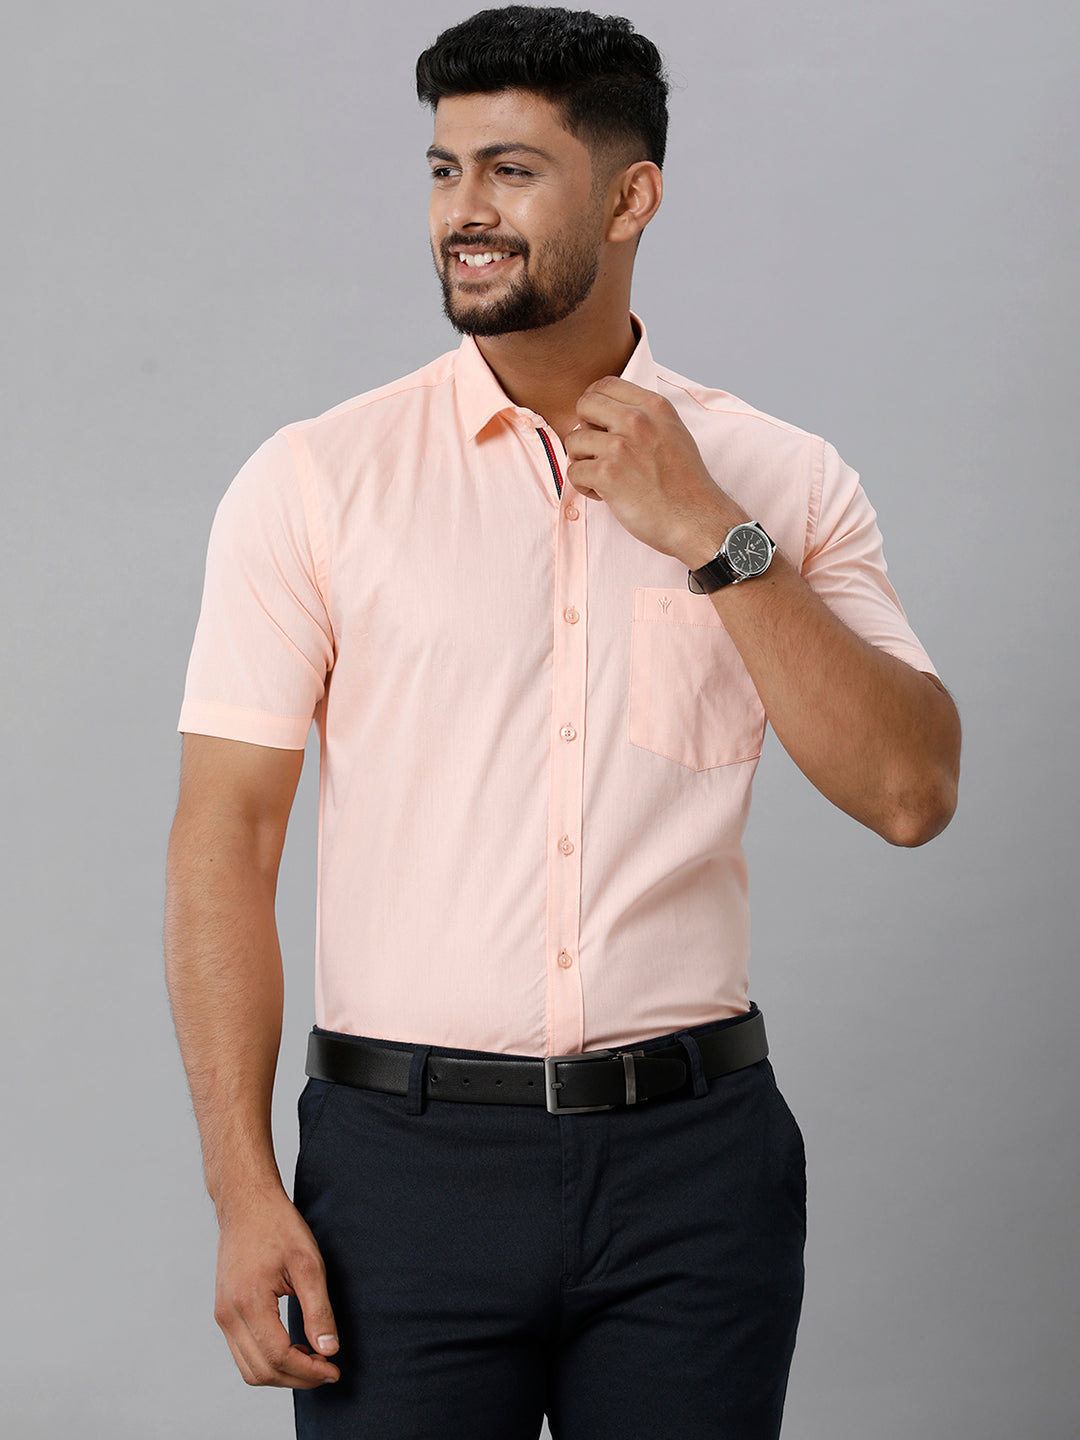 Mens Premium Cotton Formal Shirt Half Sleeves Light Orange MH G117